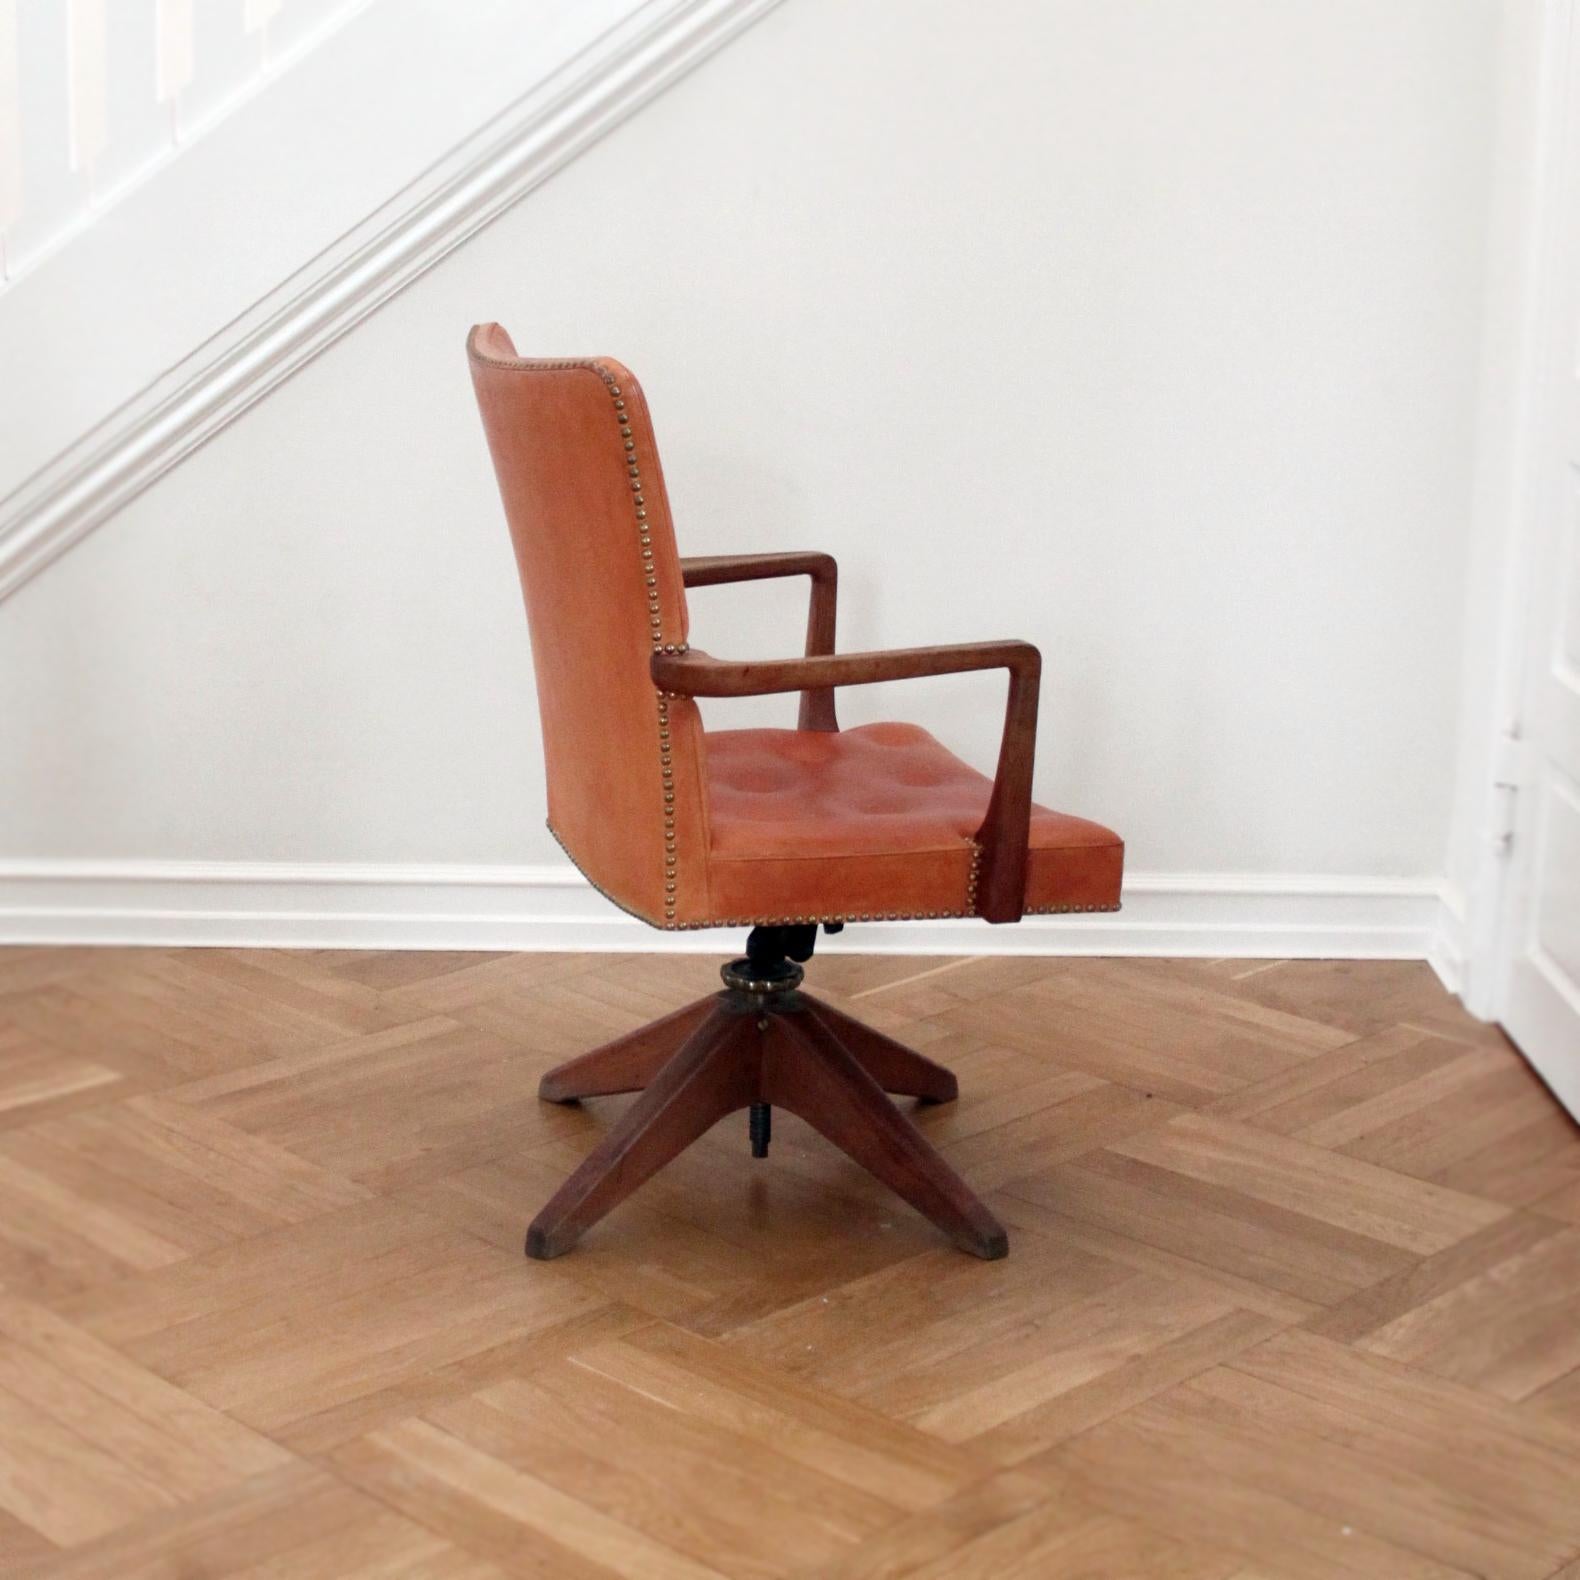 Danish Rare Executive Desk Chair in Walnut, Brass and Leather, Palle Suenson, 1940s For Sale